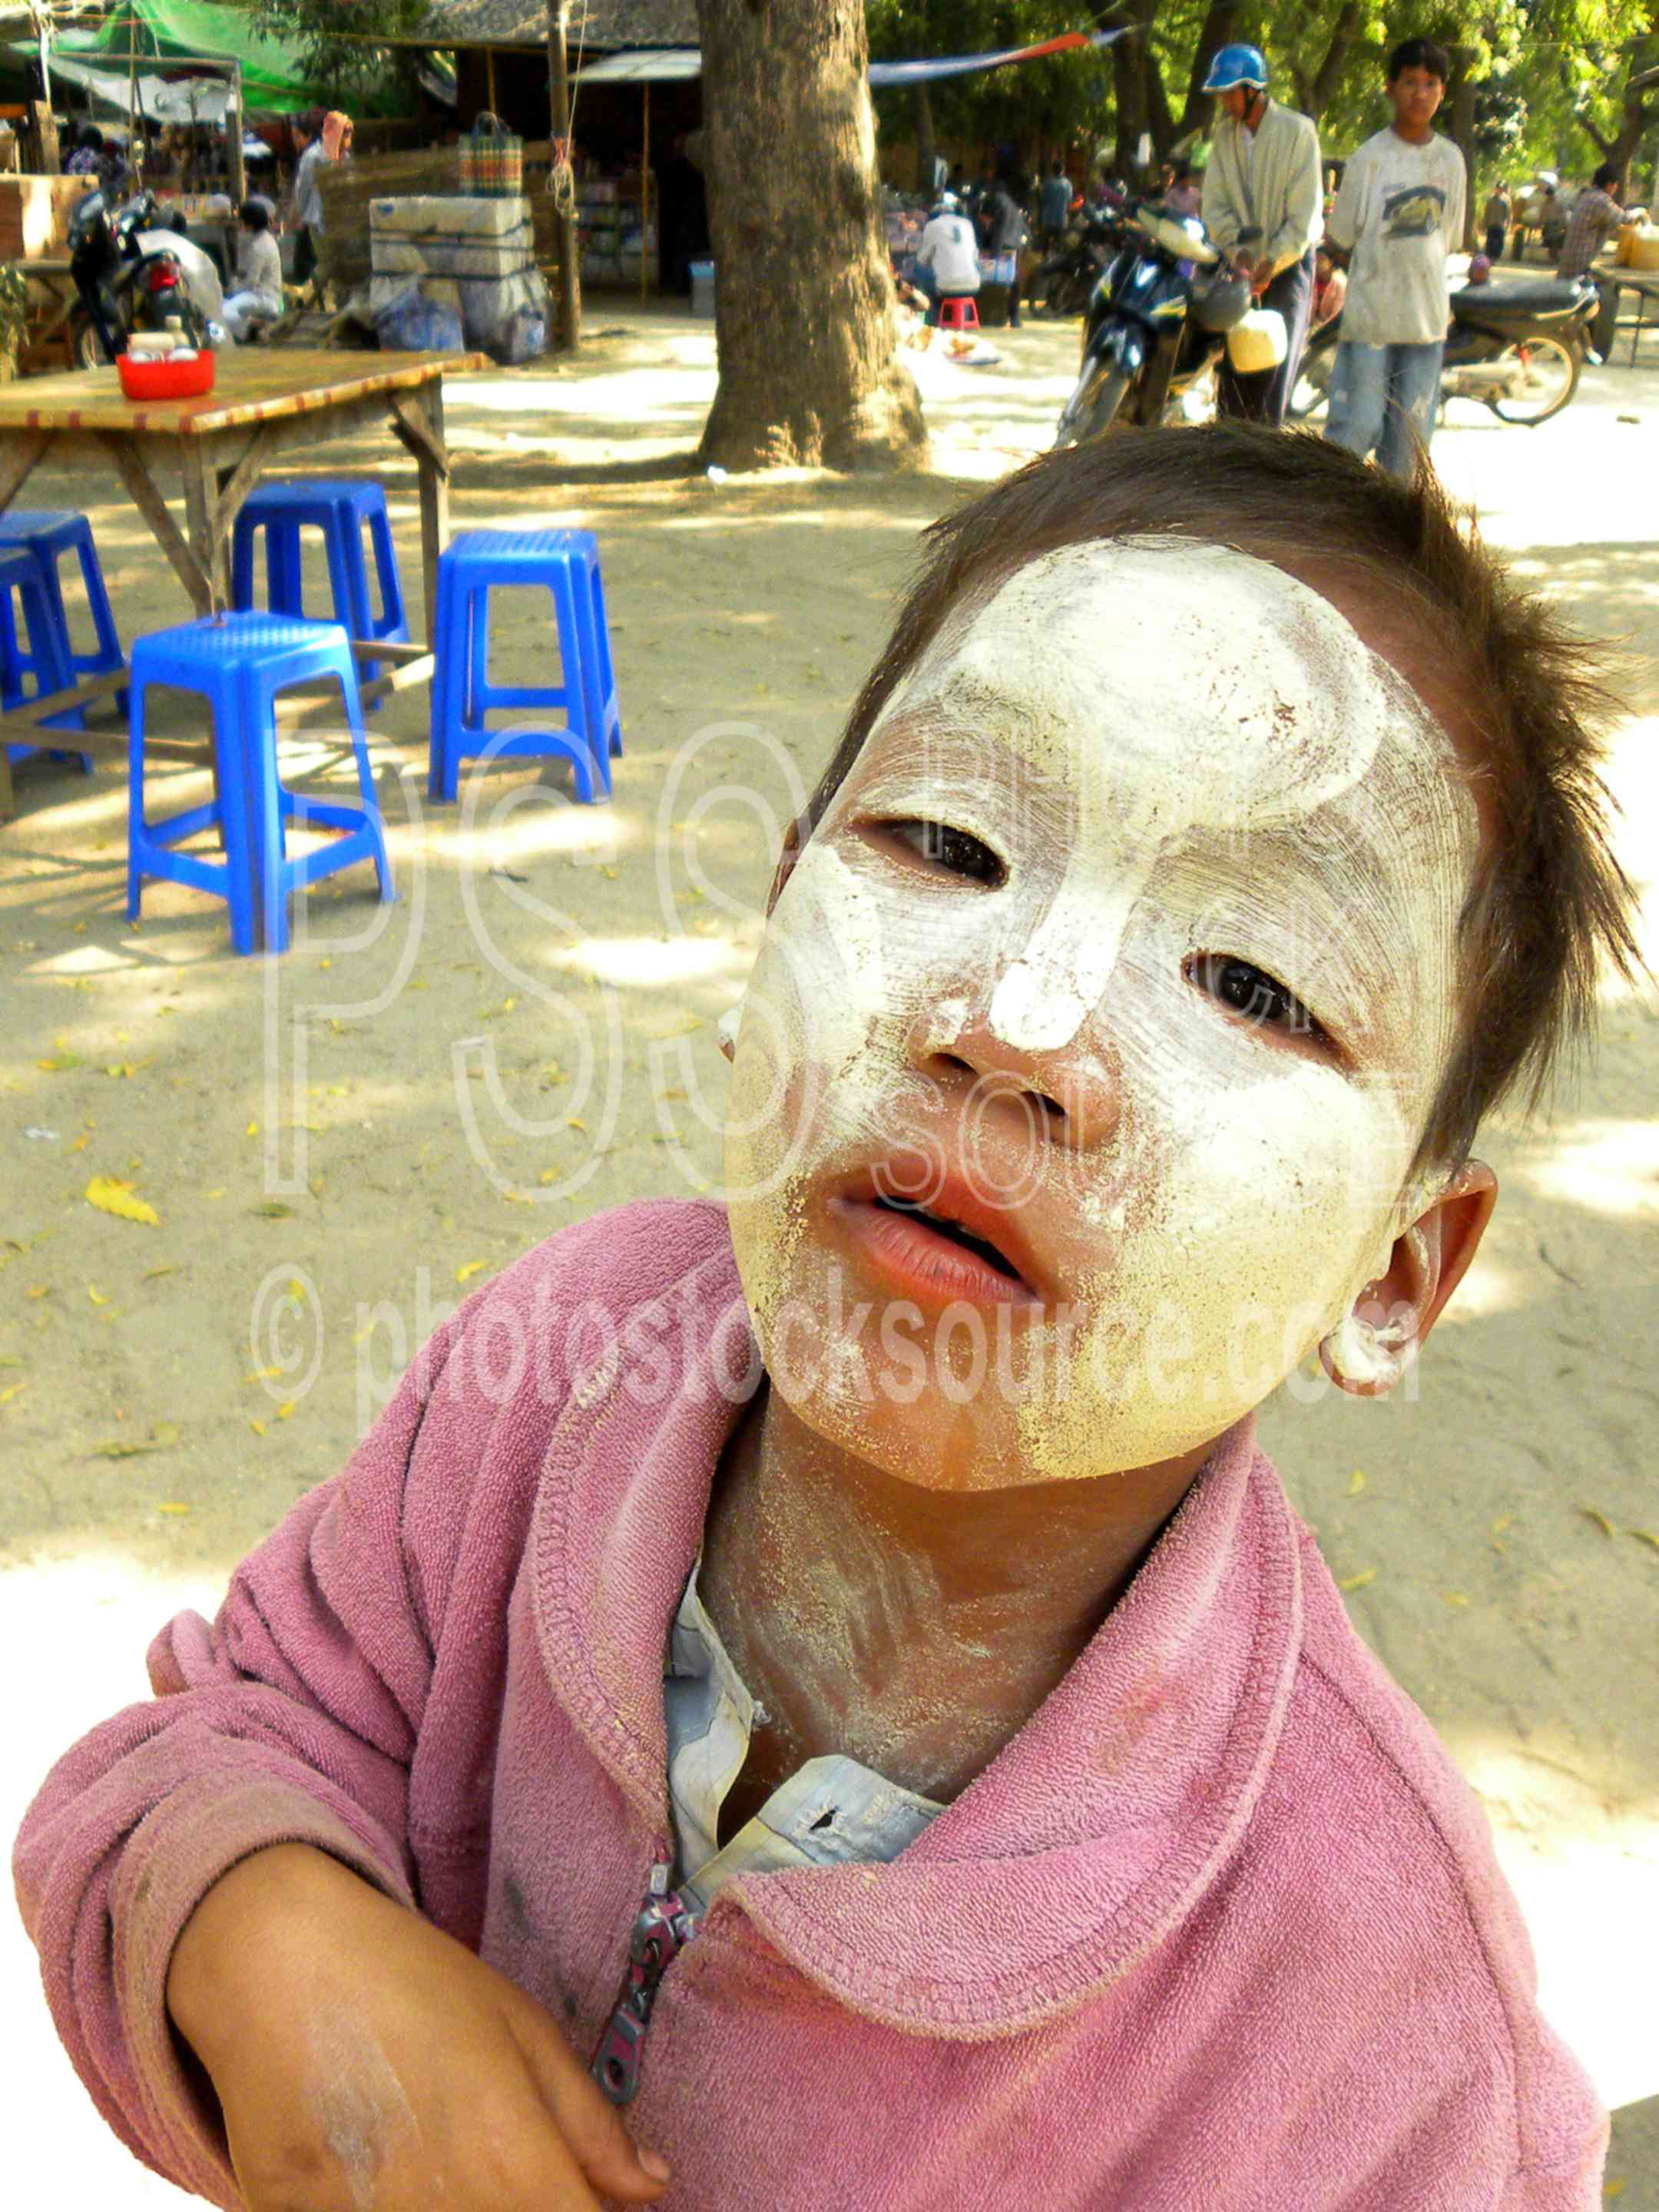 Boy Wearing Thanaka,myanmar,nyaung oo,nyaung oo market,market,seller,sellers,vendor,vendors,commerce,thanaka,child,boy